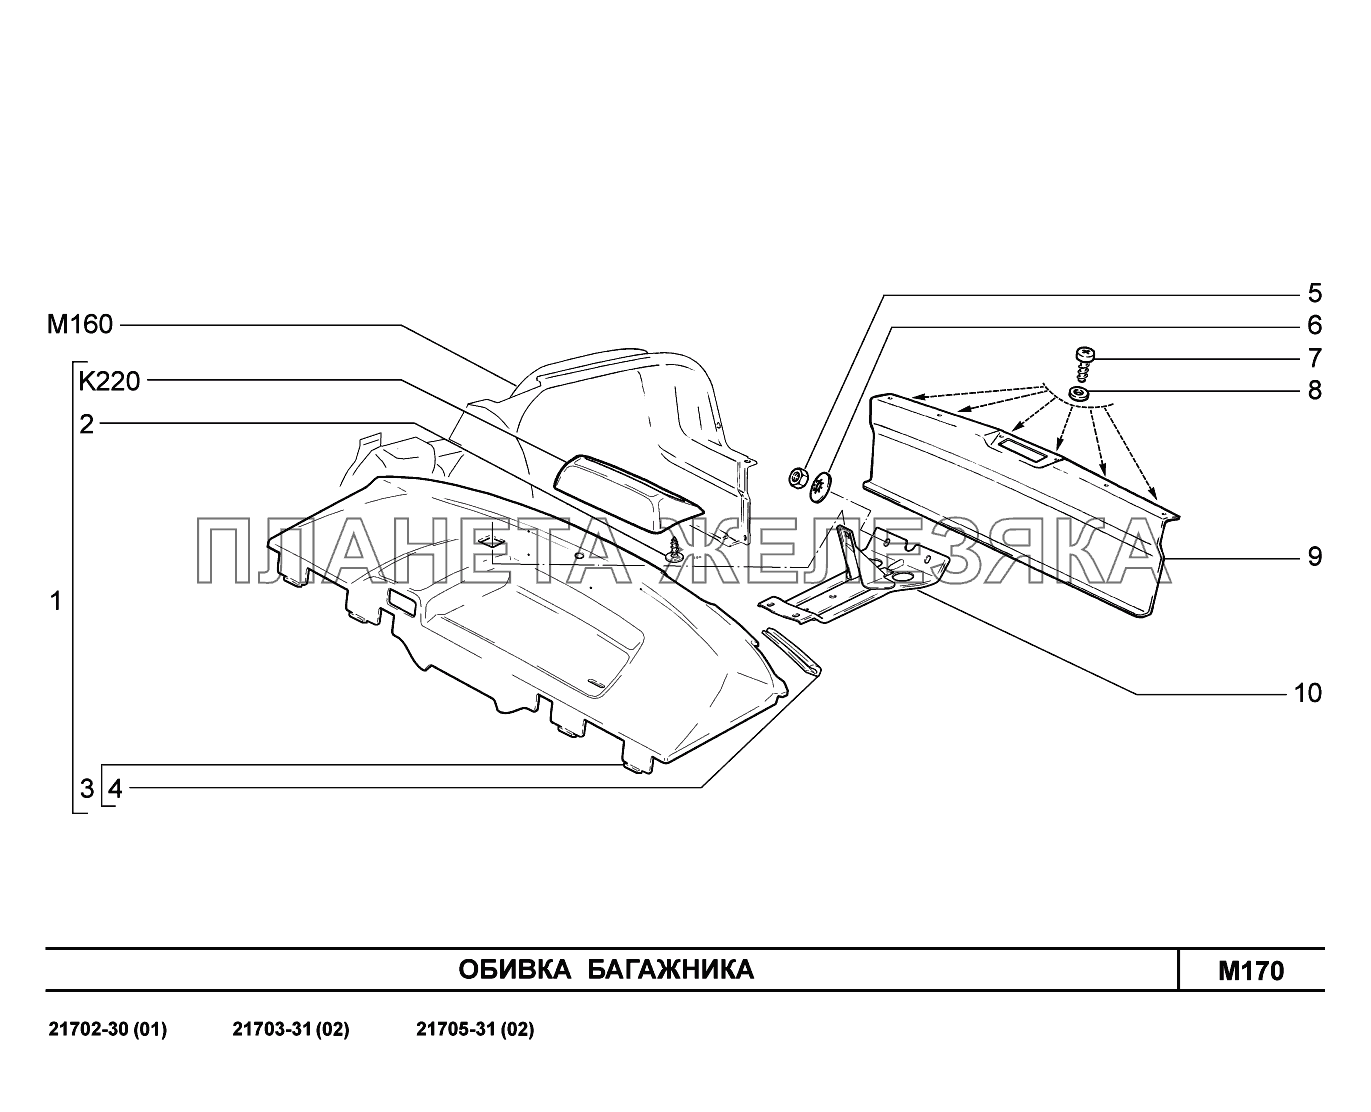 M170. Обивка багажника ВАЗ-2170 